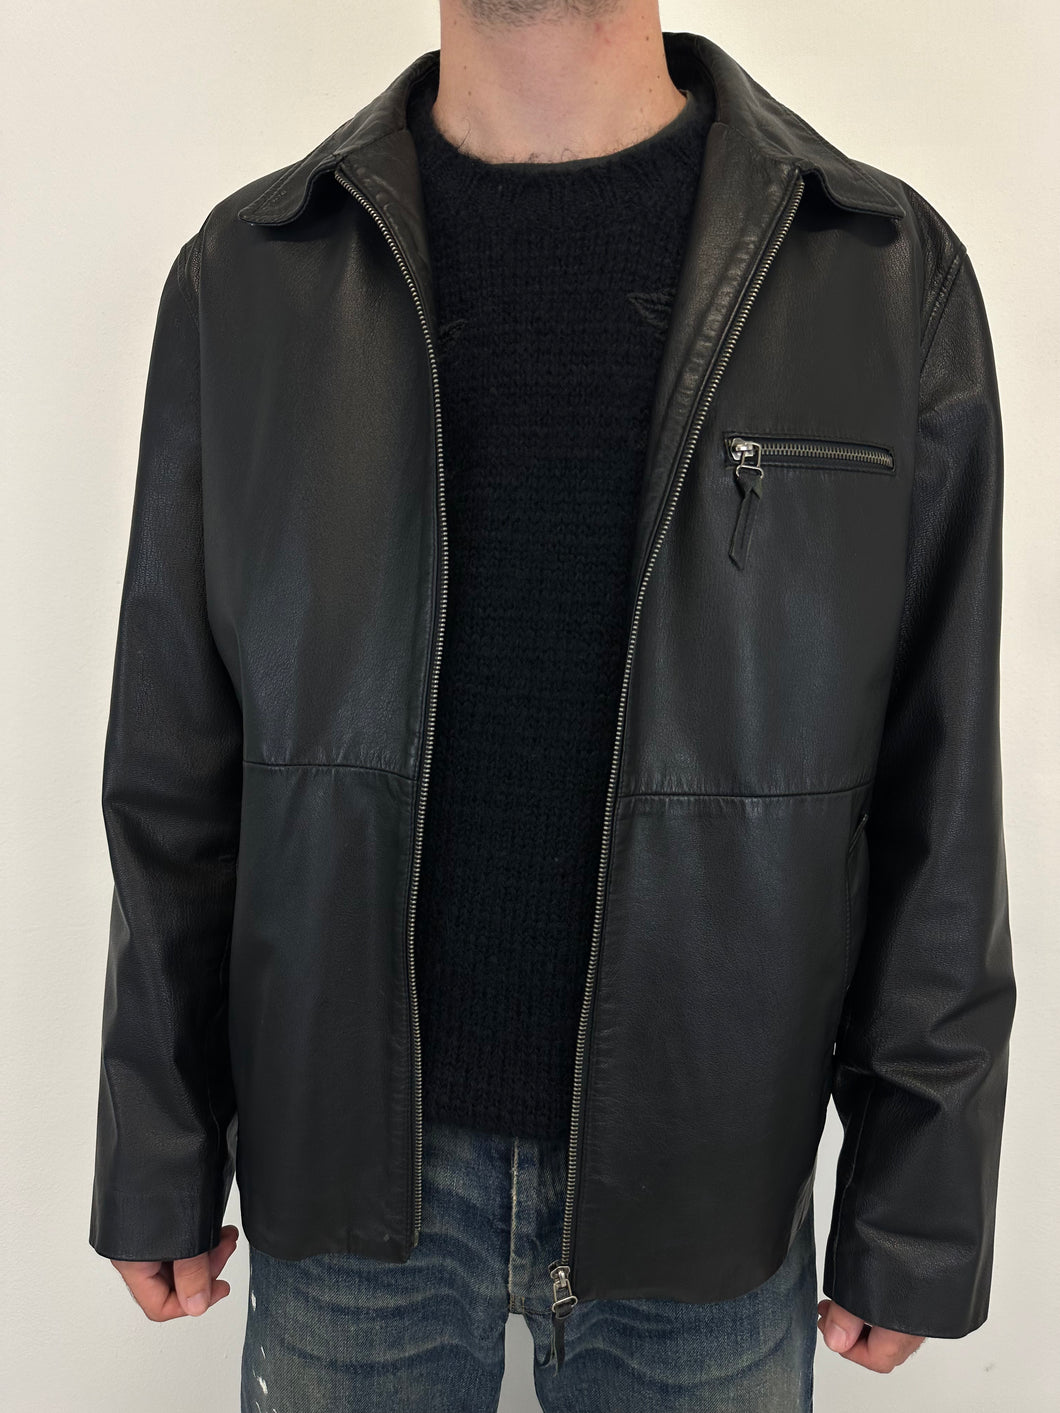 2000s Dolce & Gabbana black leather Jacket